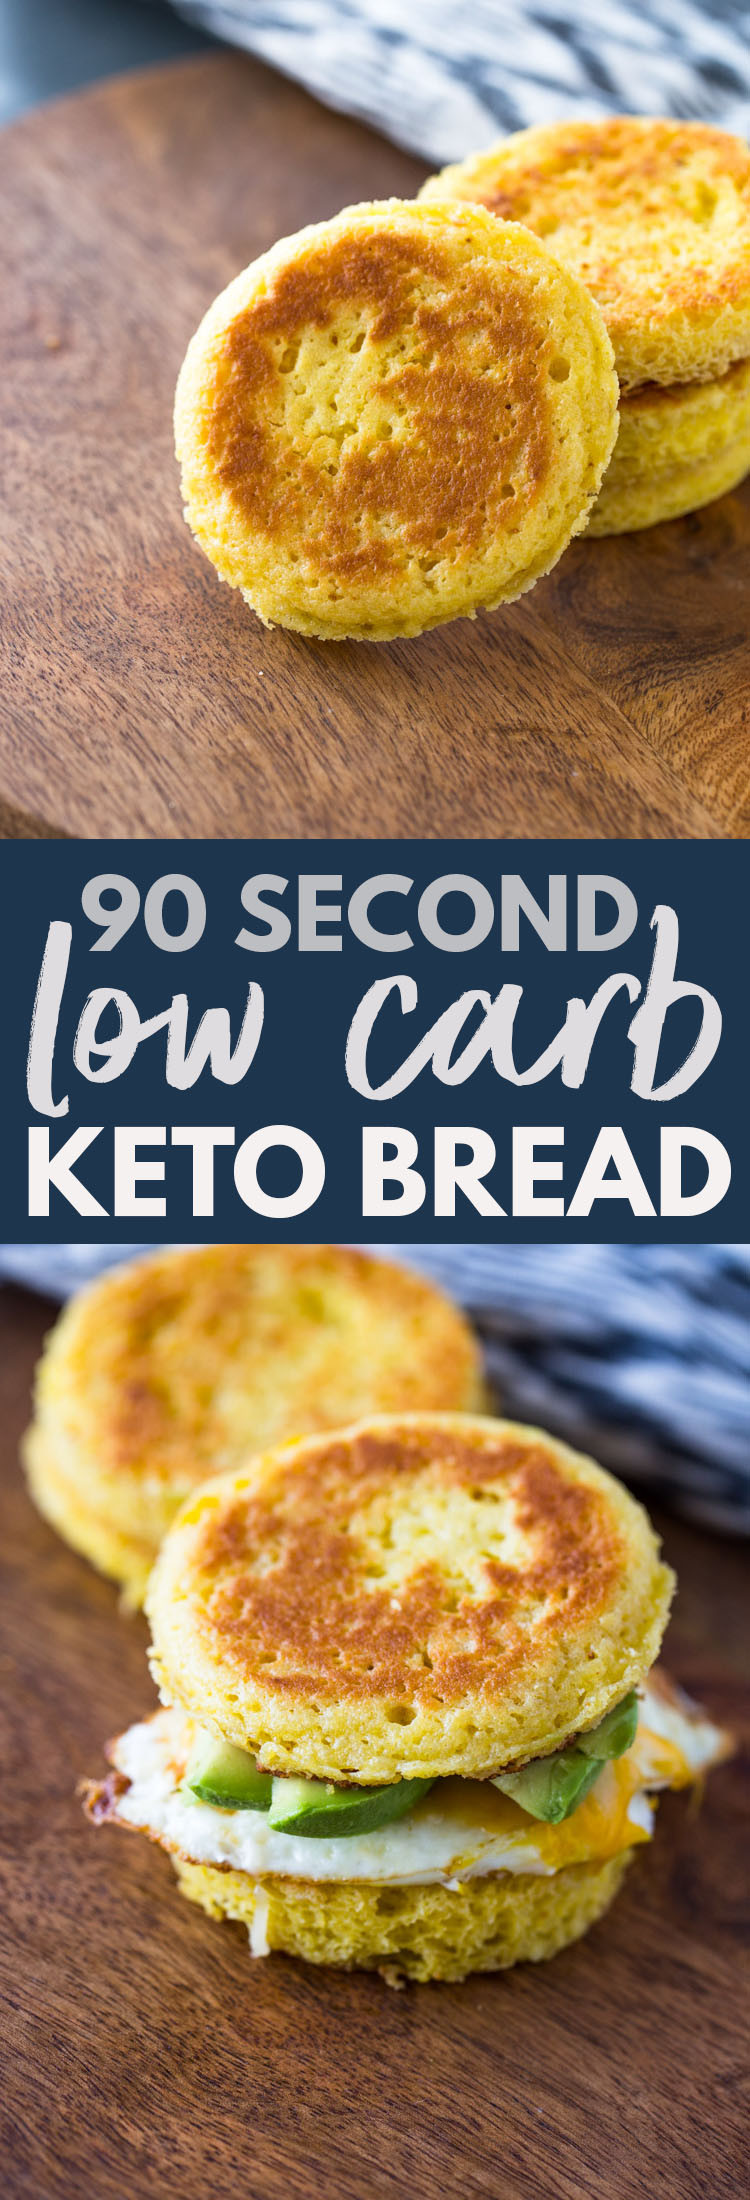 90 Second Vegan Keto Bread
 90 Second Microwavable Low Carb Keto Bread